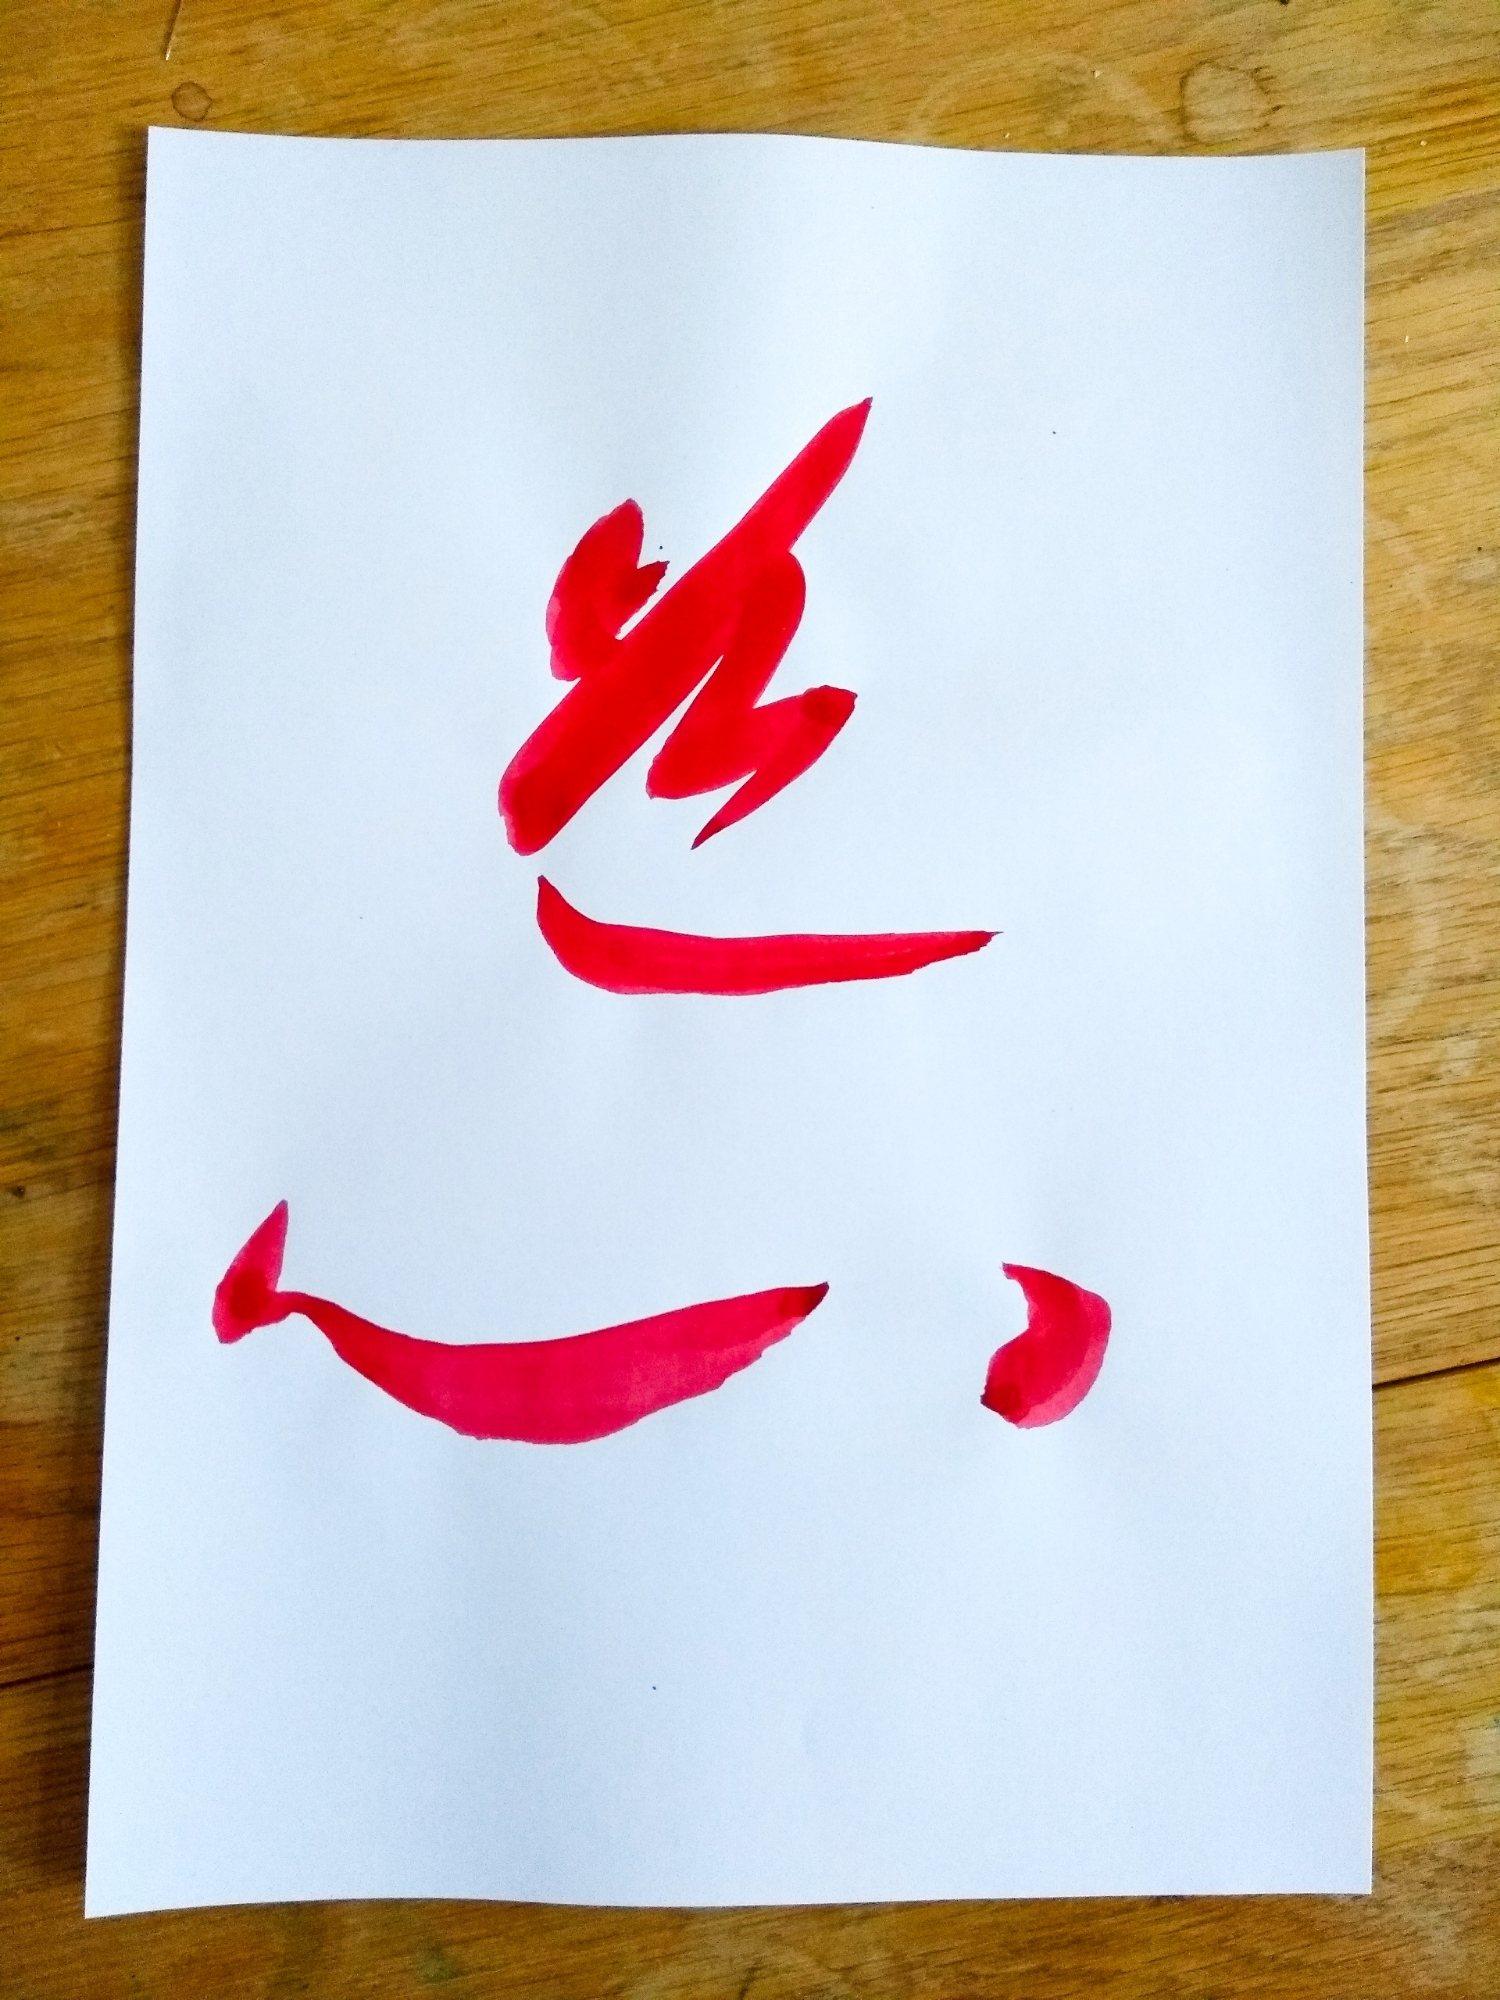 Japanese calligraphy meaning 'Heart' 心  (shin, or kokoro). It